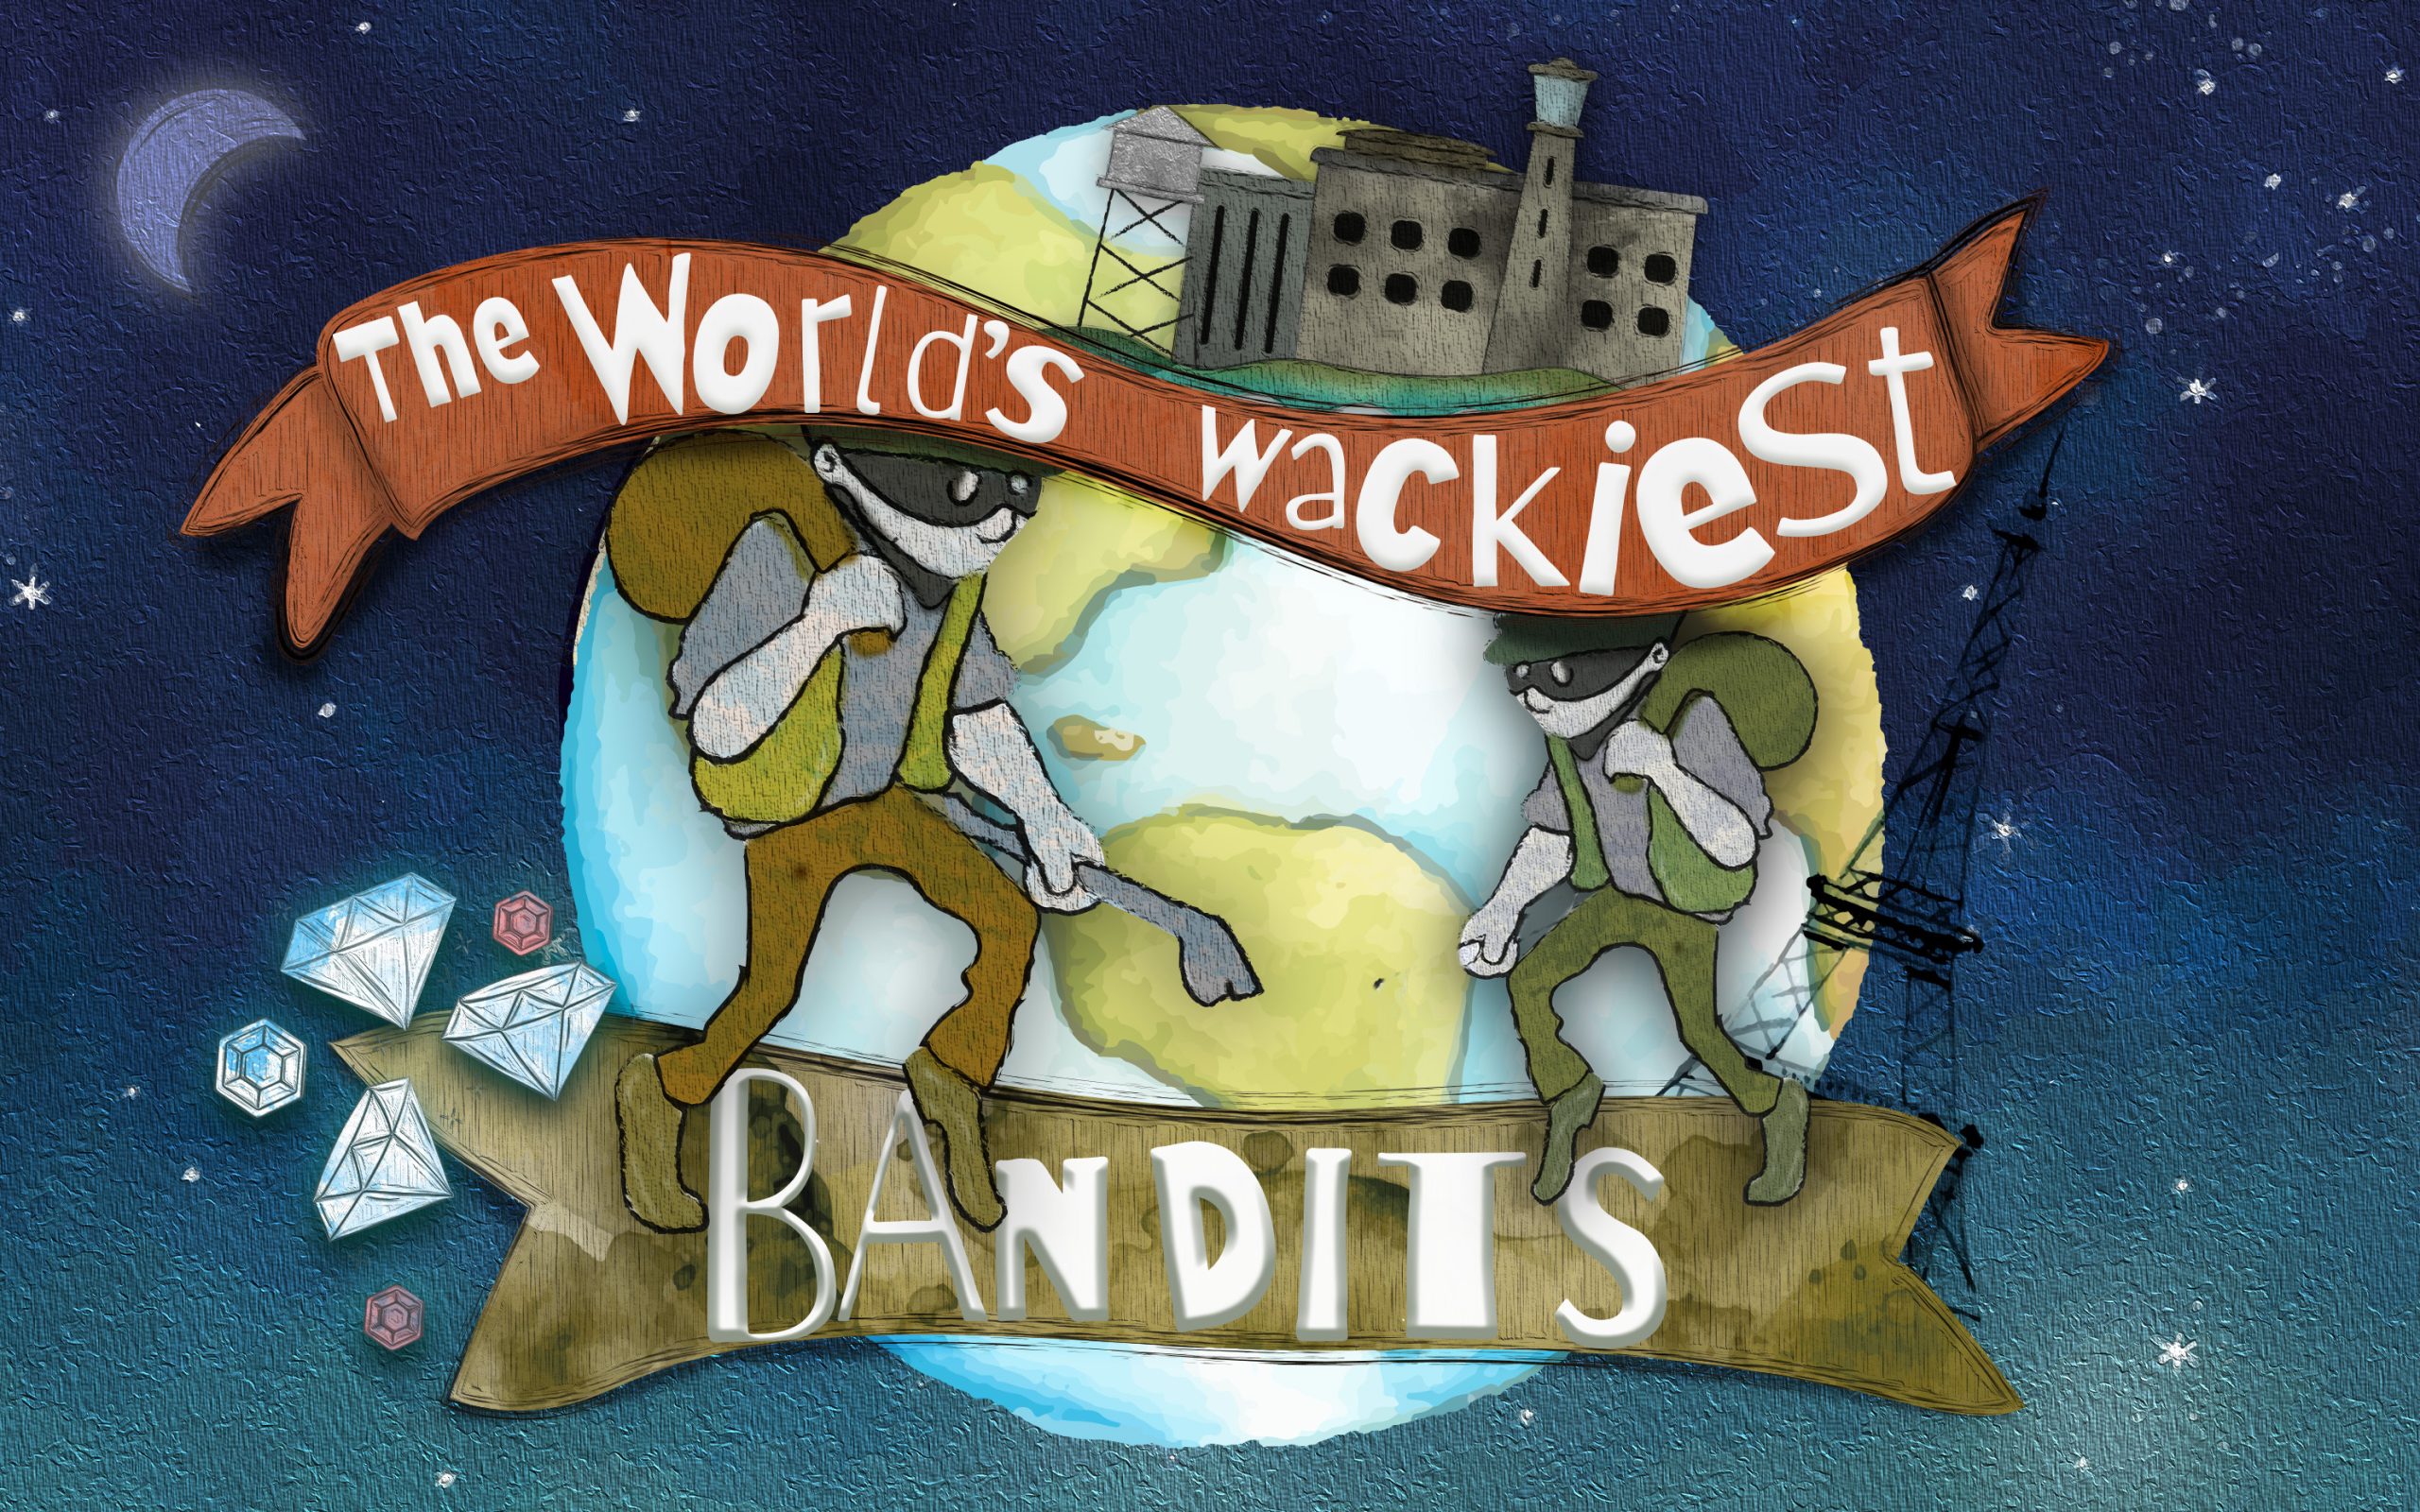 The World's Wackiest Bandits podcast